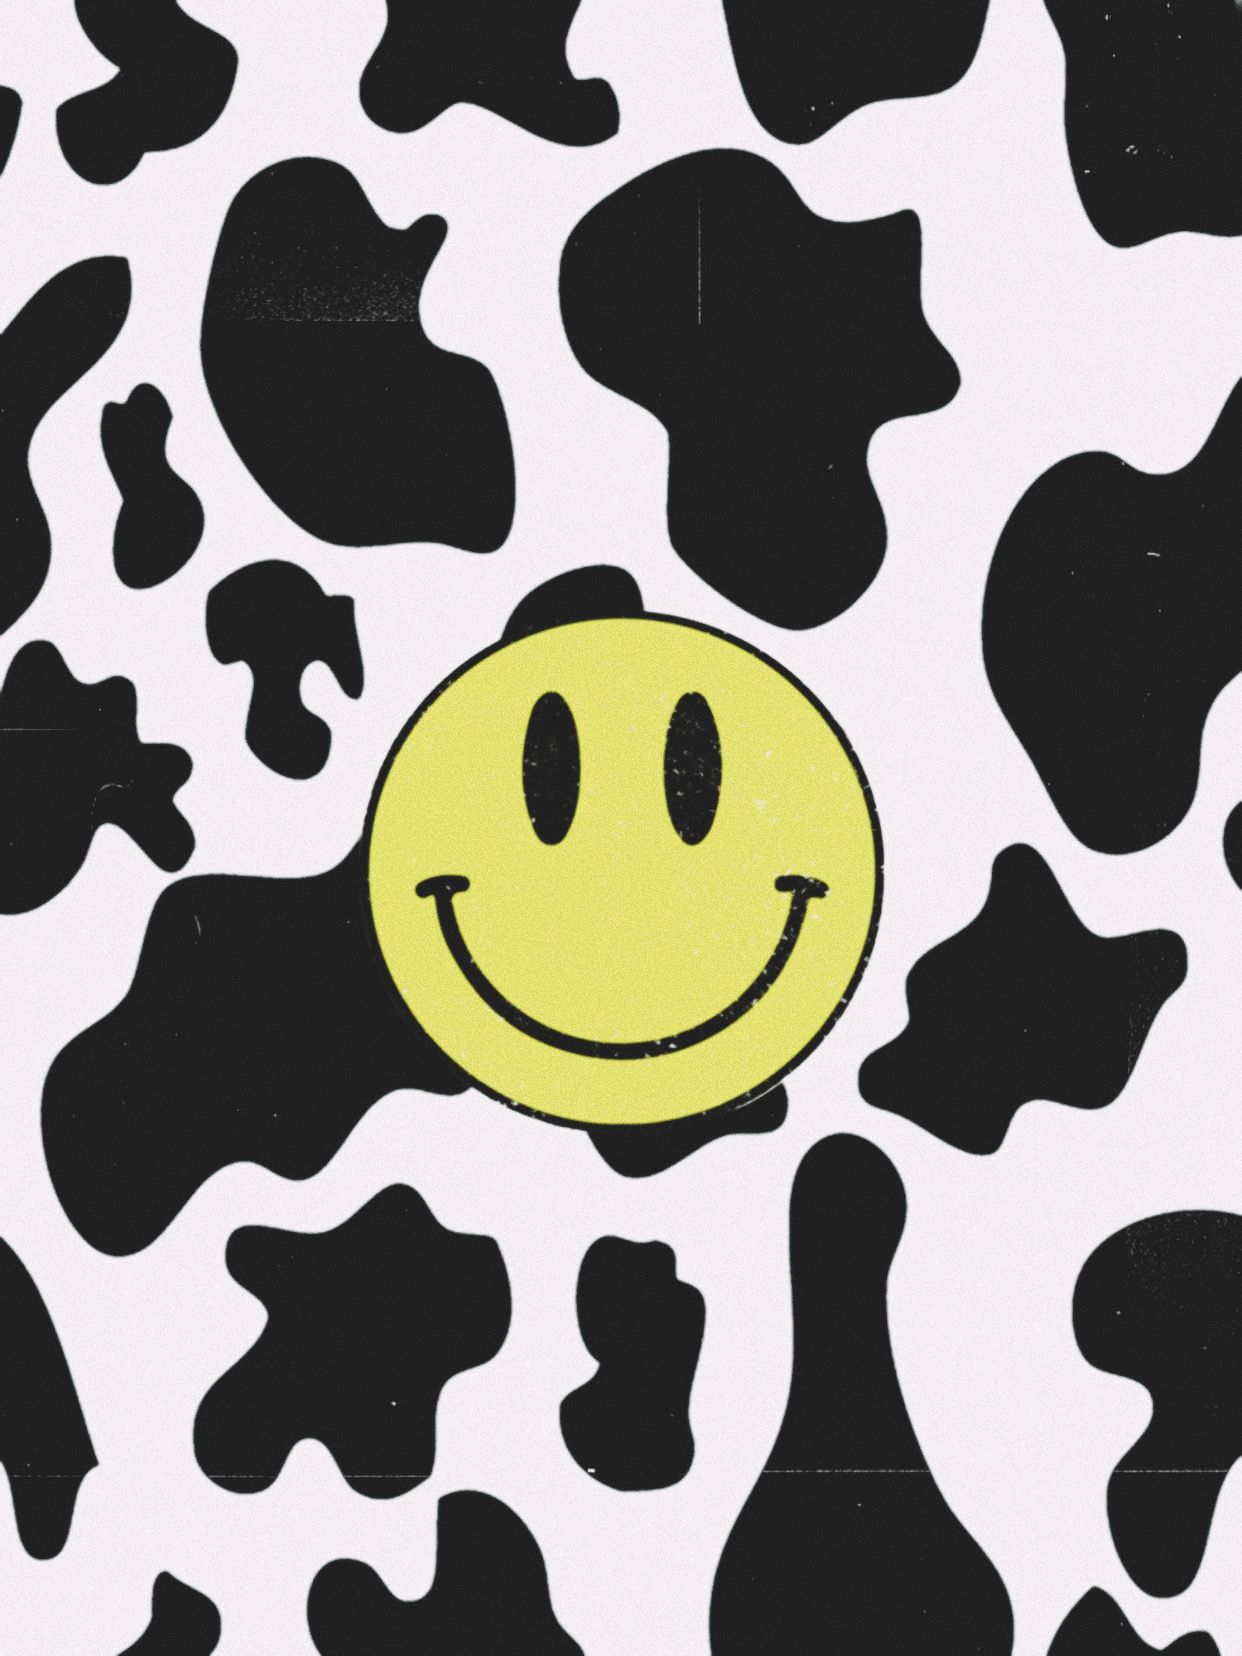 Smiley face wallpaper. Cow print wallpaper, Cow wallpaper, Edgy wallpaper